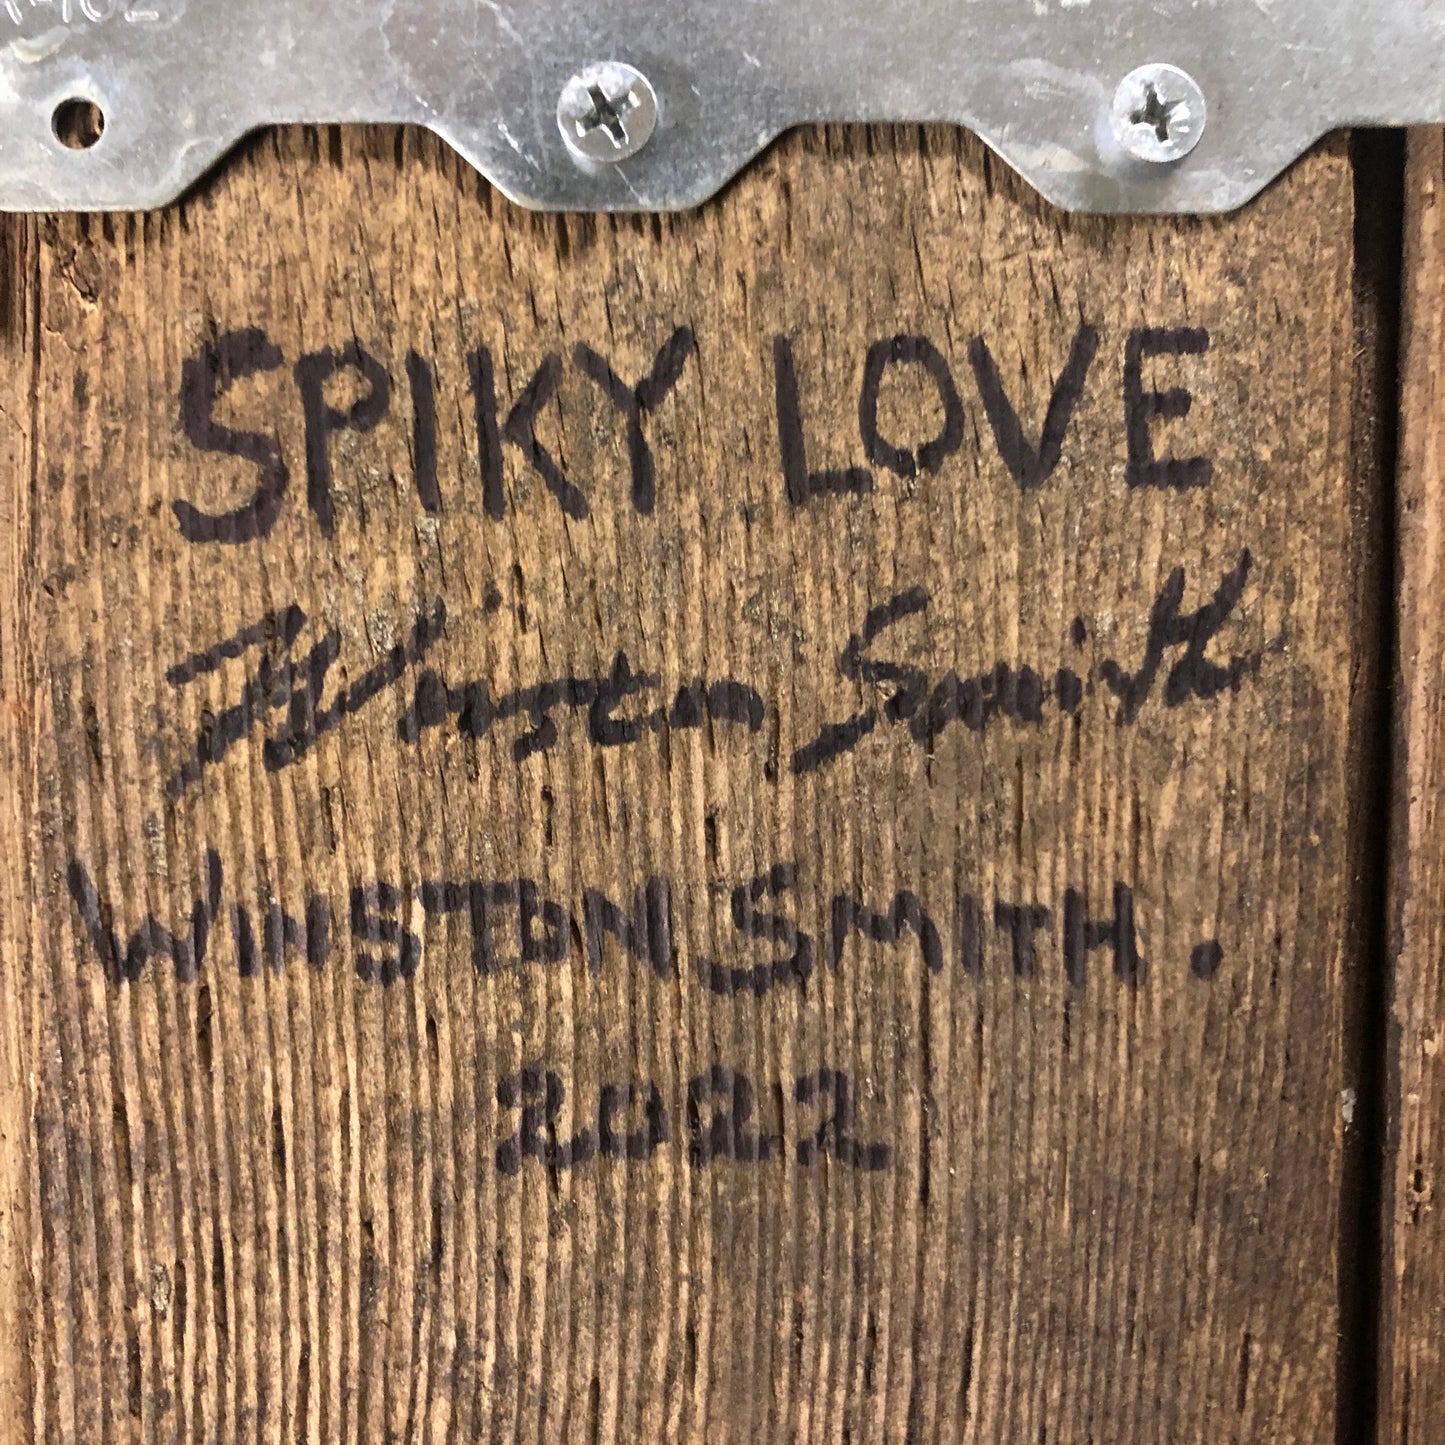 Winston Smith "Spiky Love" Barbwire on Wood